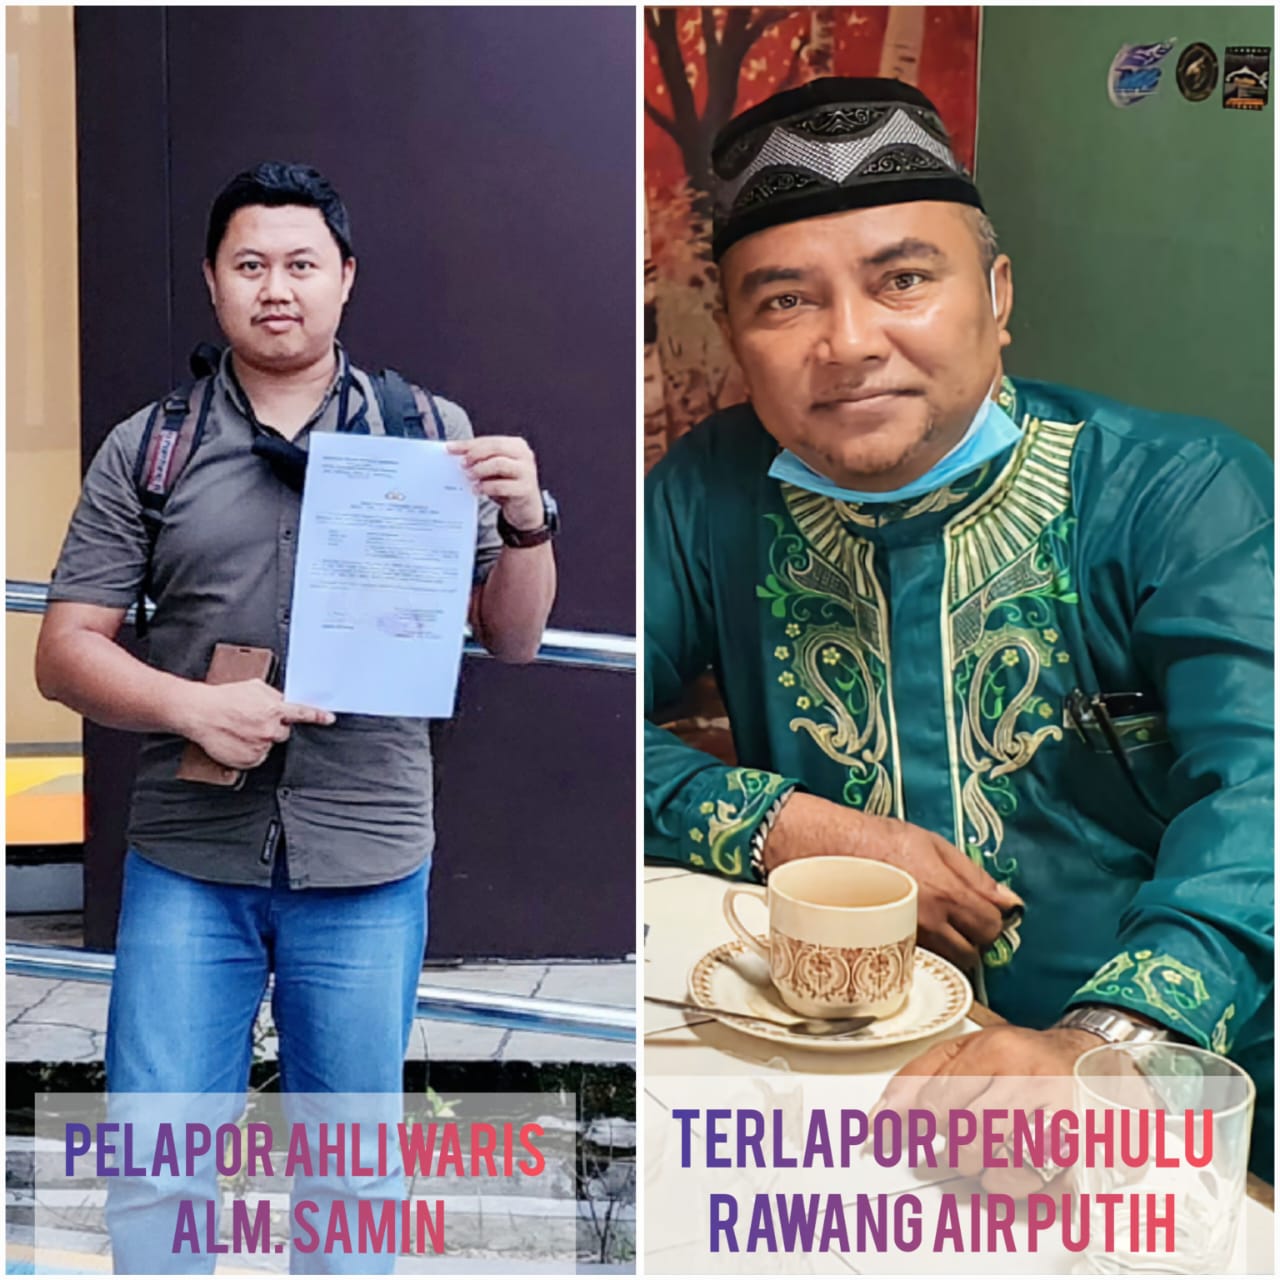 Terbitkan SKGR baru, Kepala Desa/Penghulu Rawang Air Putih jadi Terlapor di Polda Riau